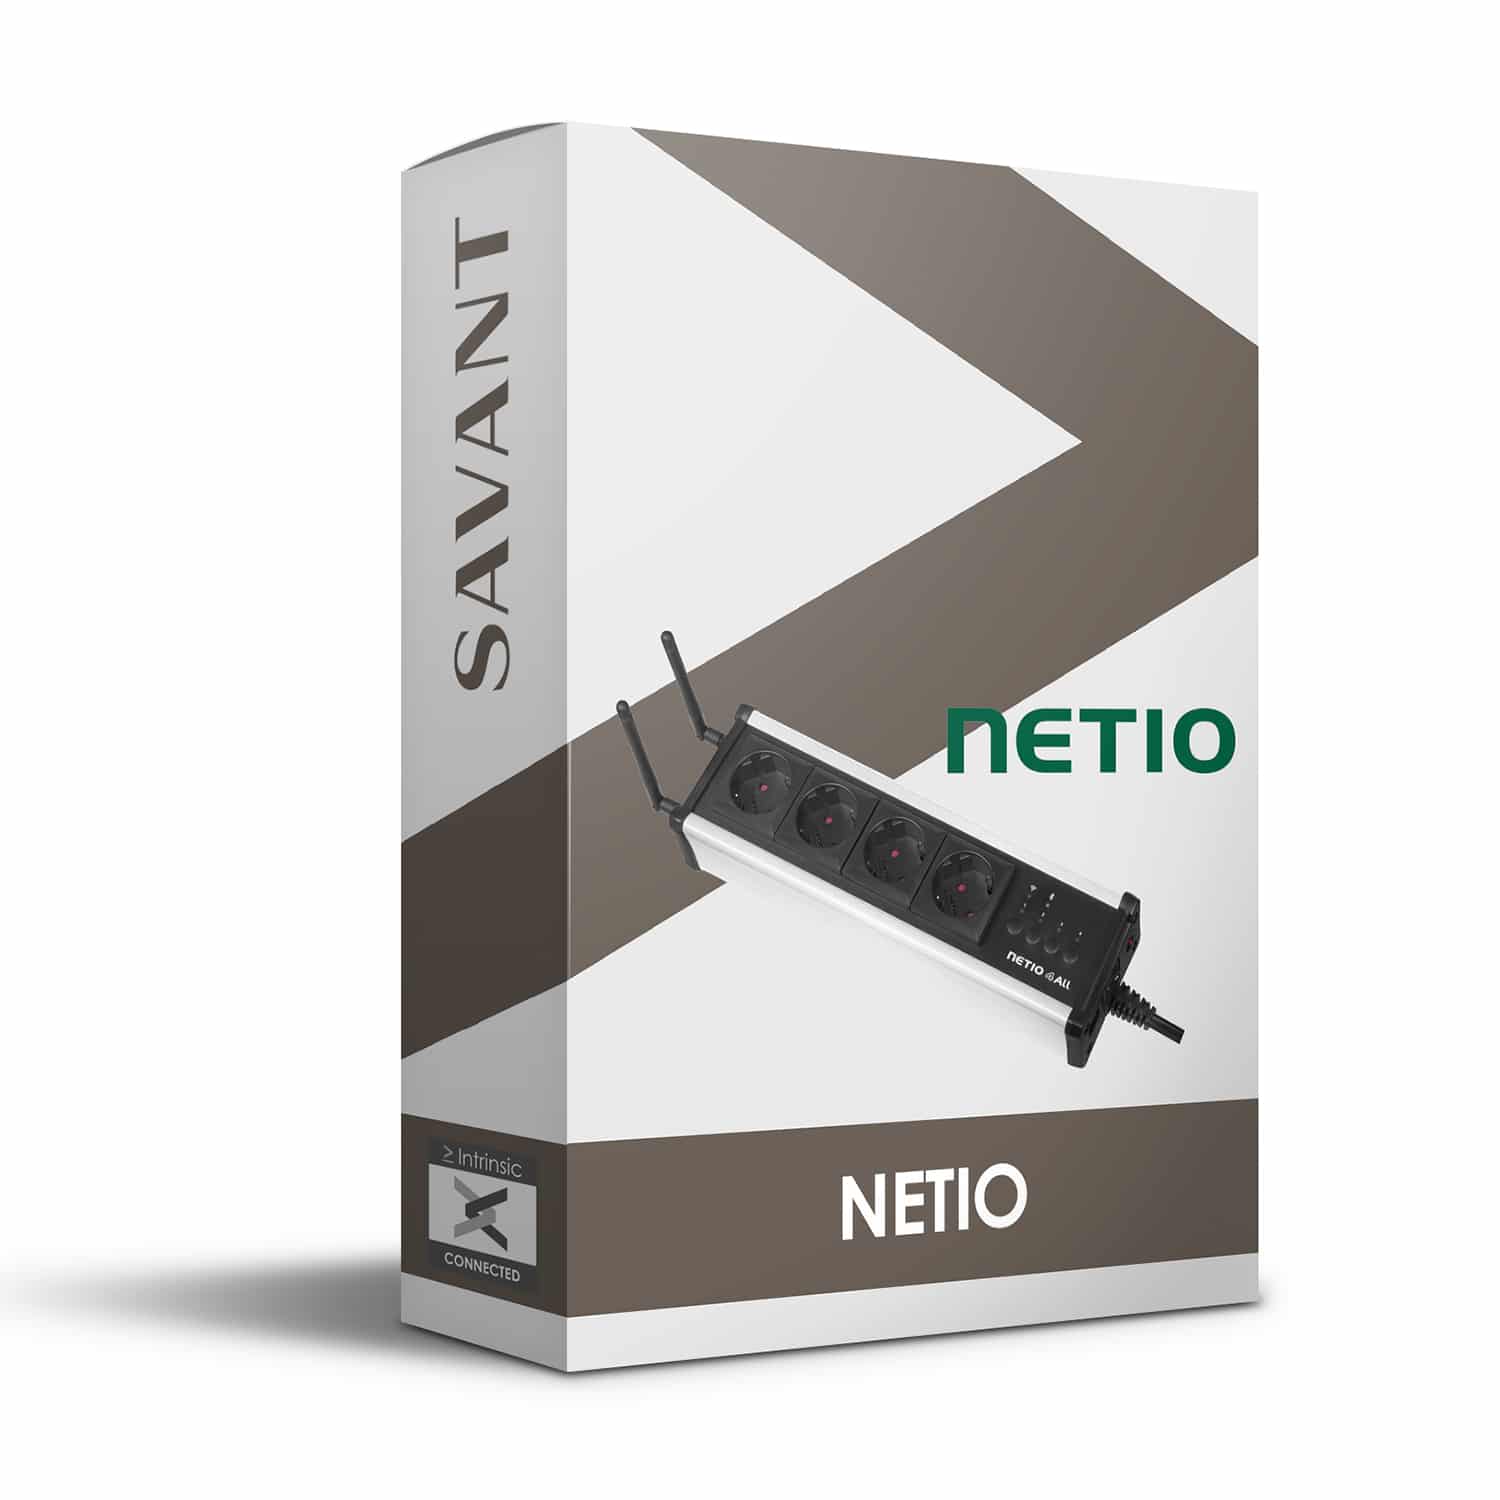 Savant profile for NETIO smart PDUs